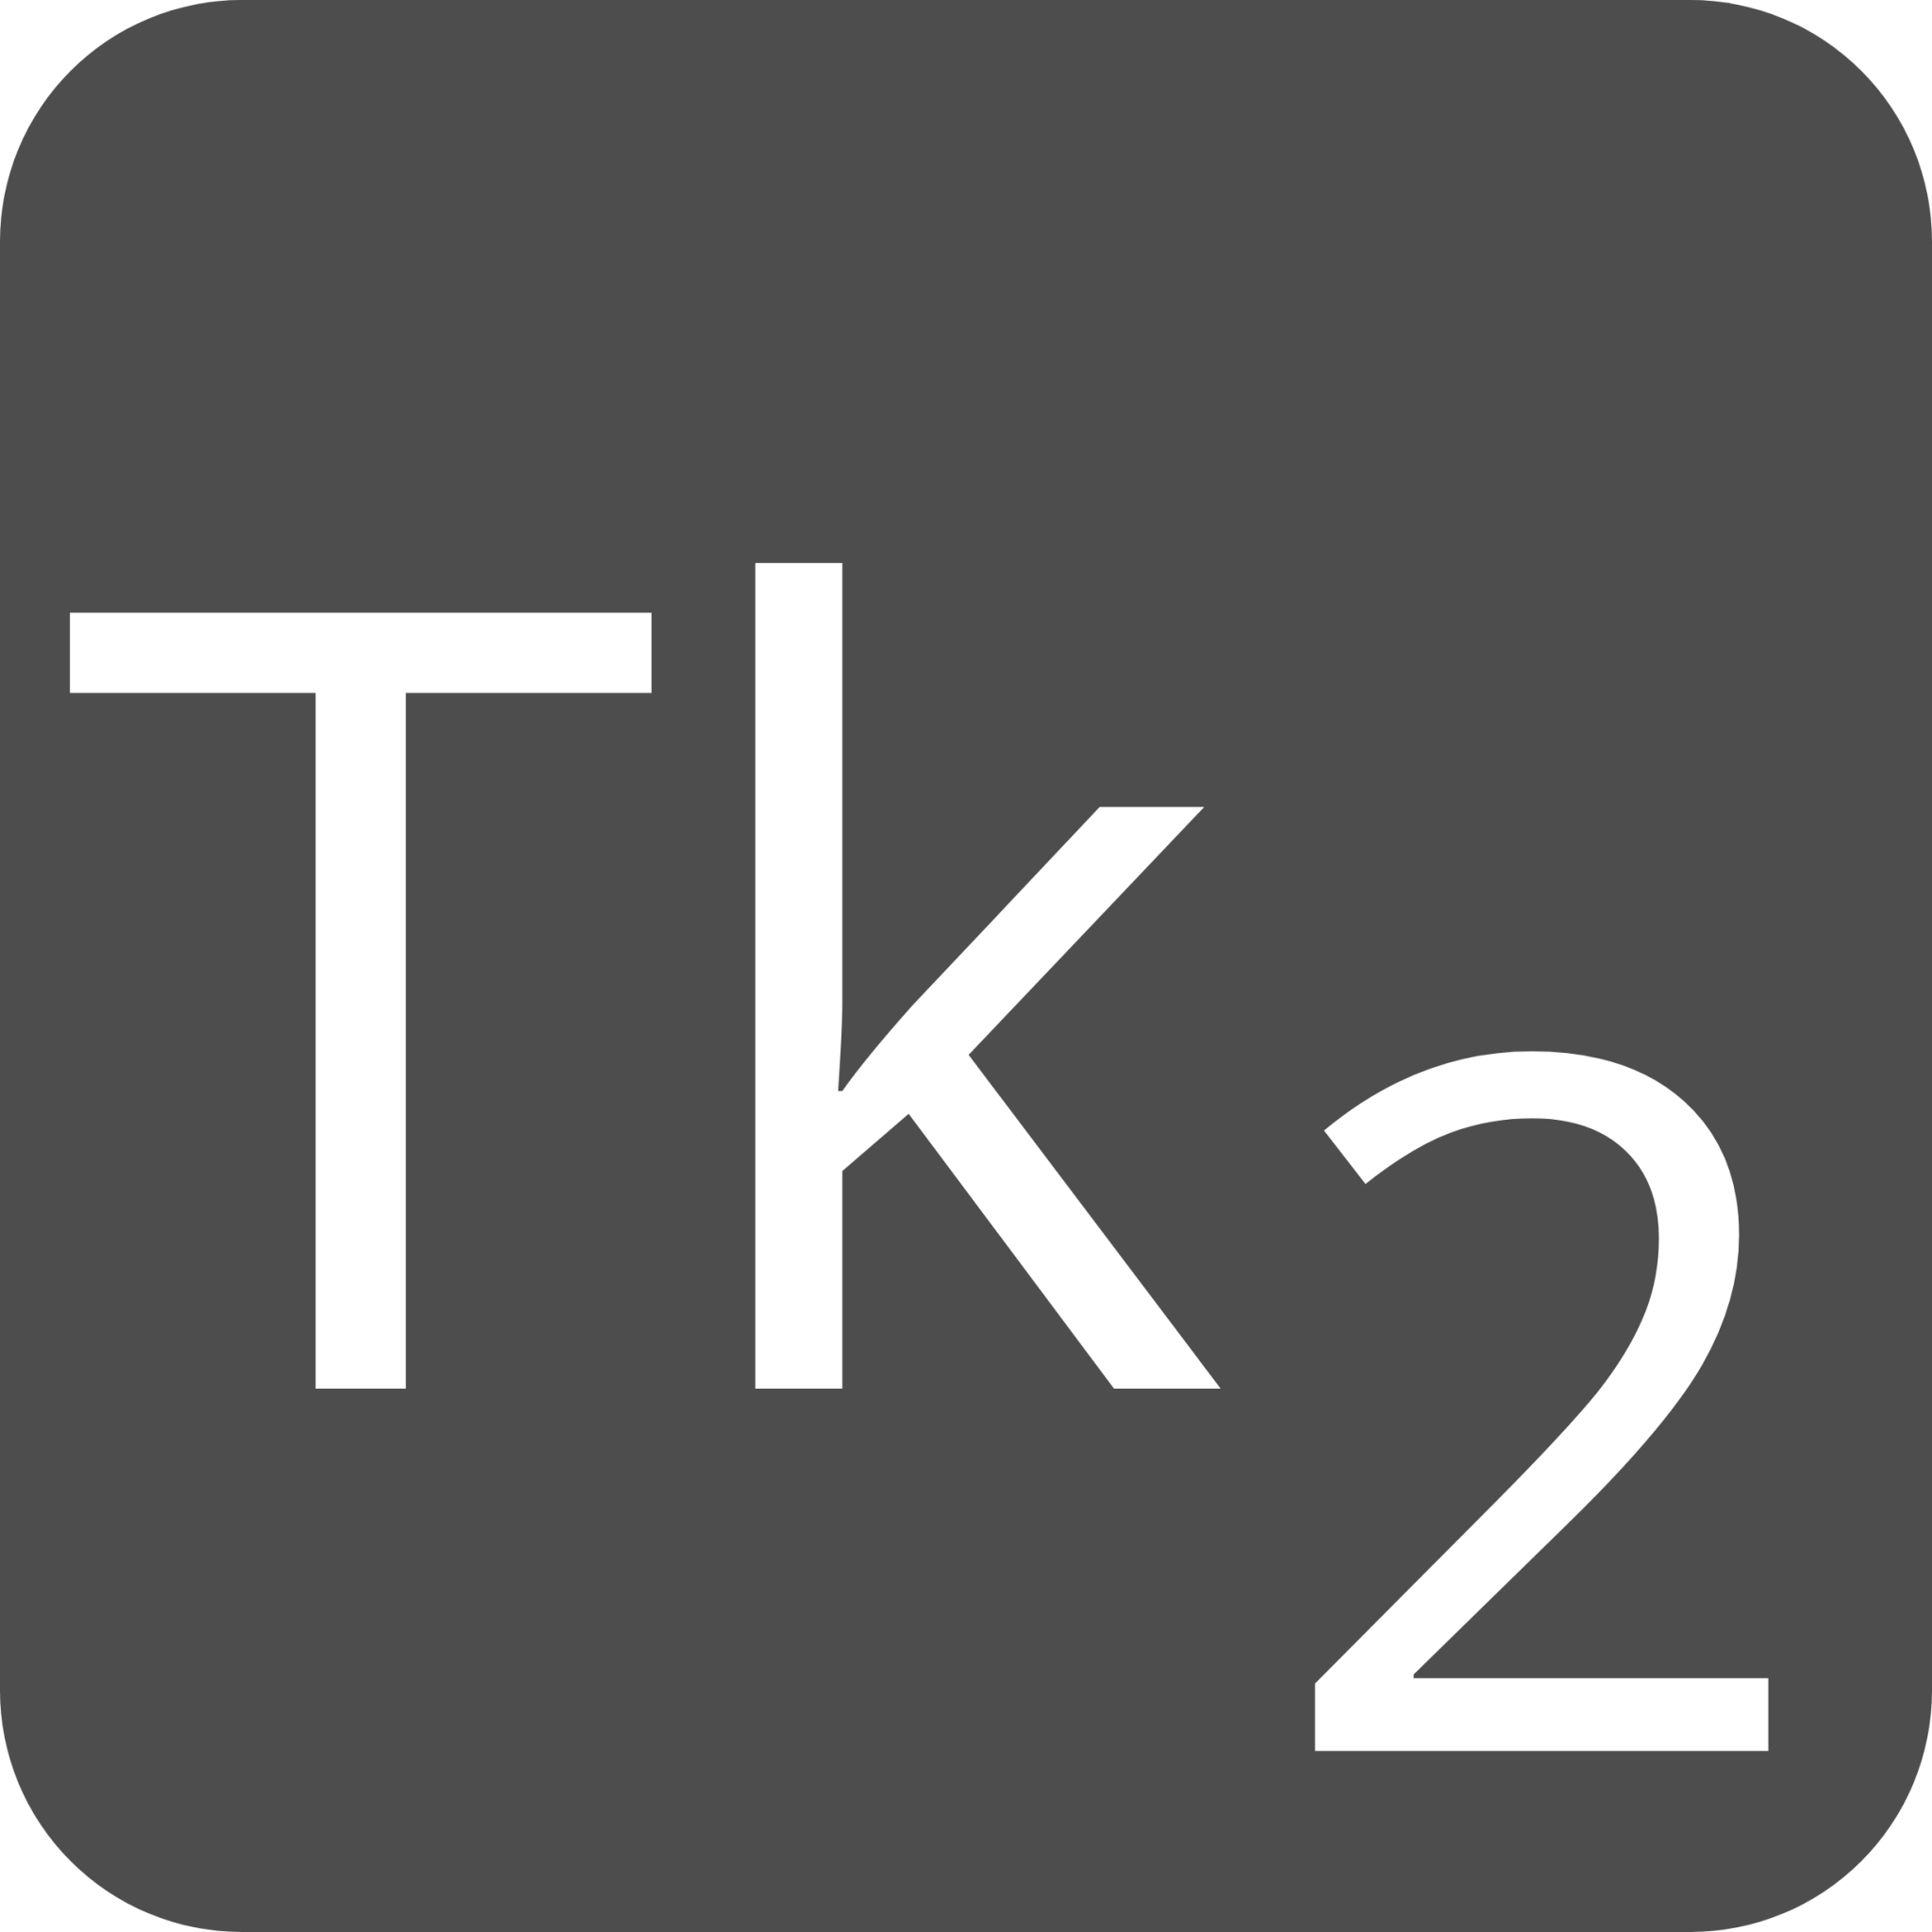 indicator keyboard Tk 2 icon